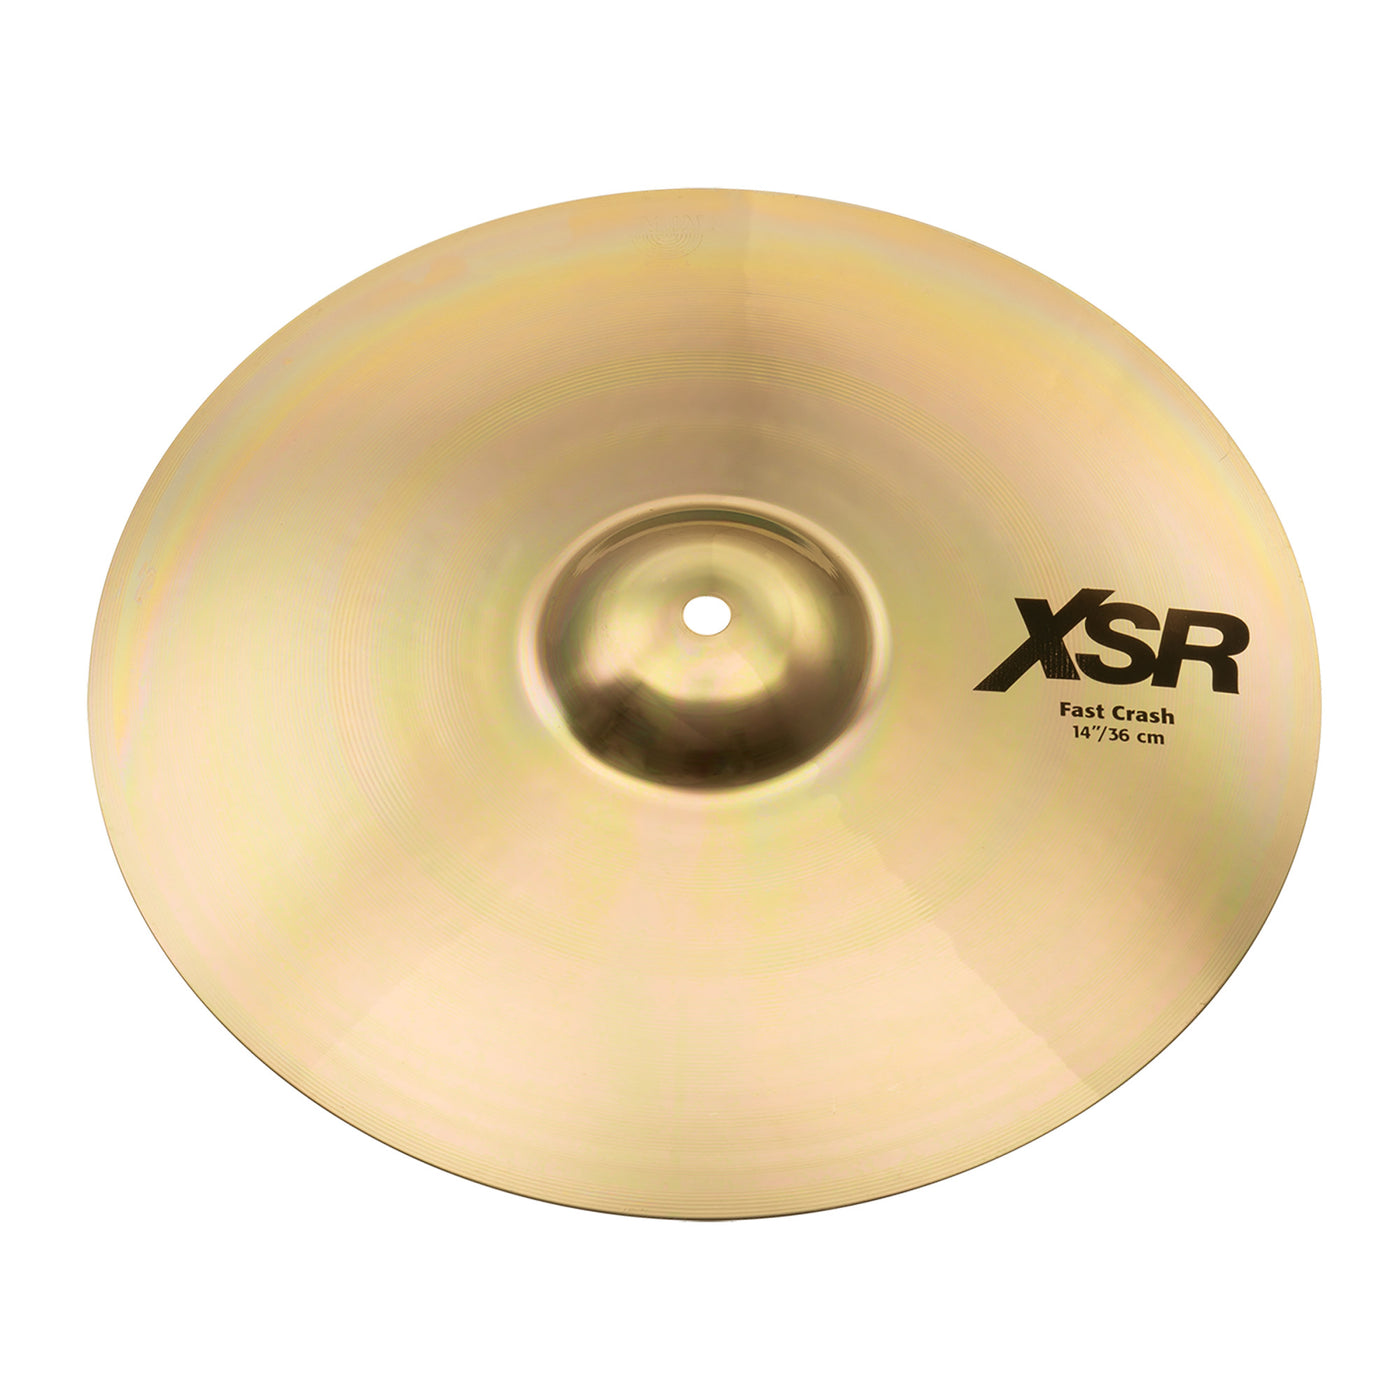 Sabian 14" XSR Fast Crash Cymbal - Brilliant Finish